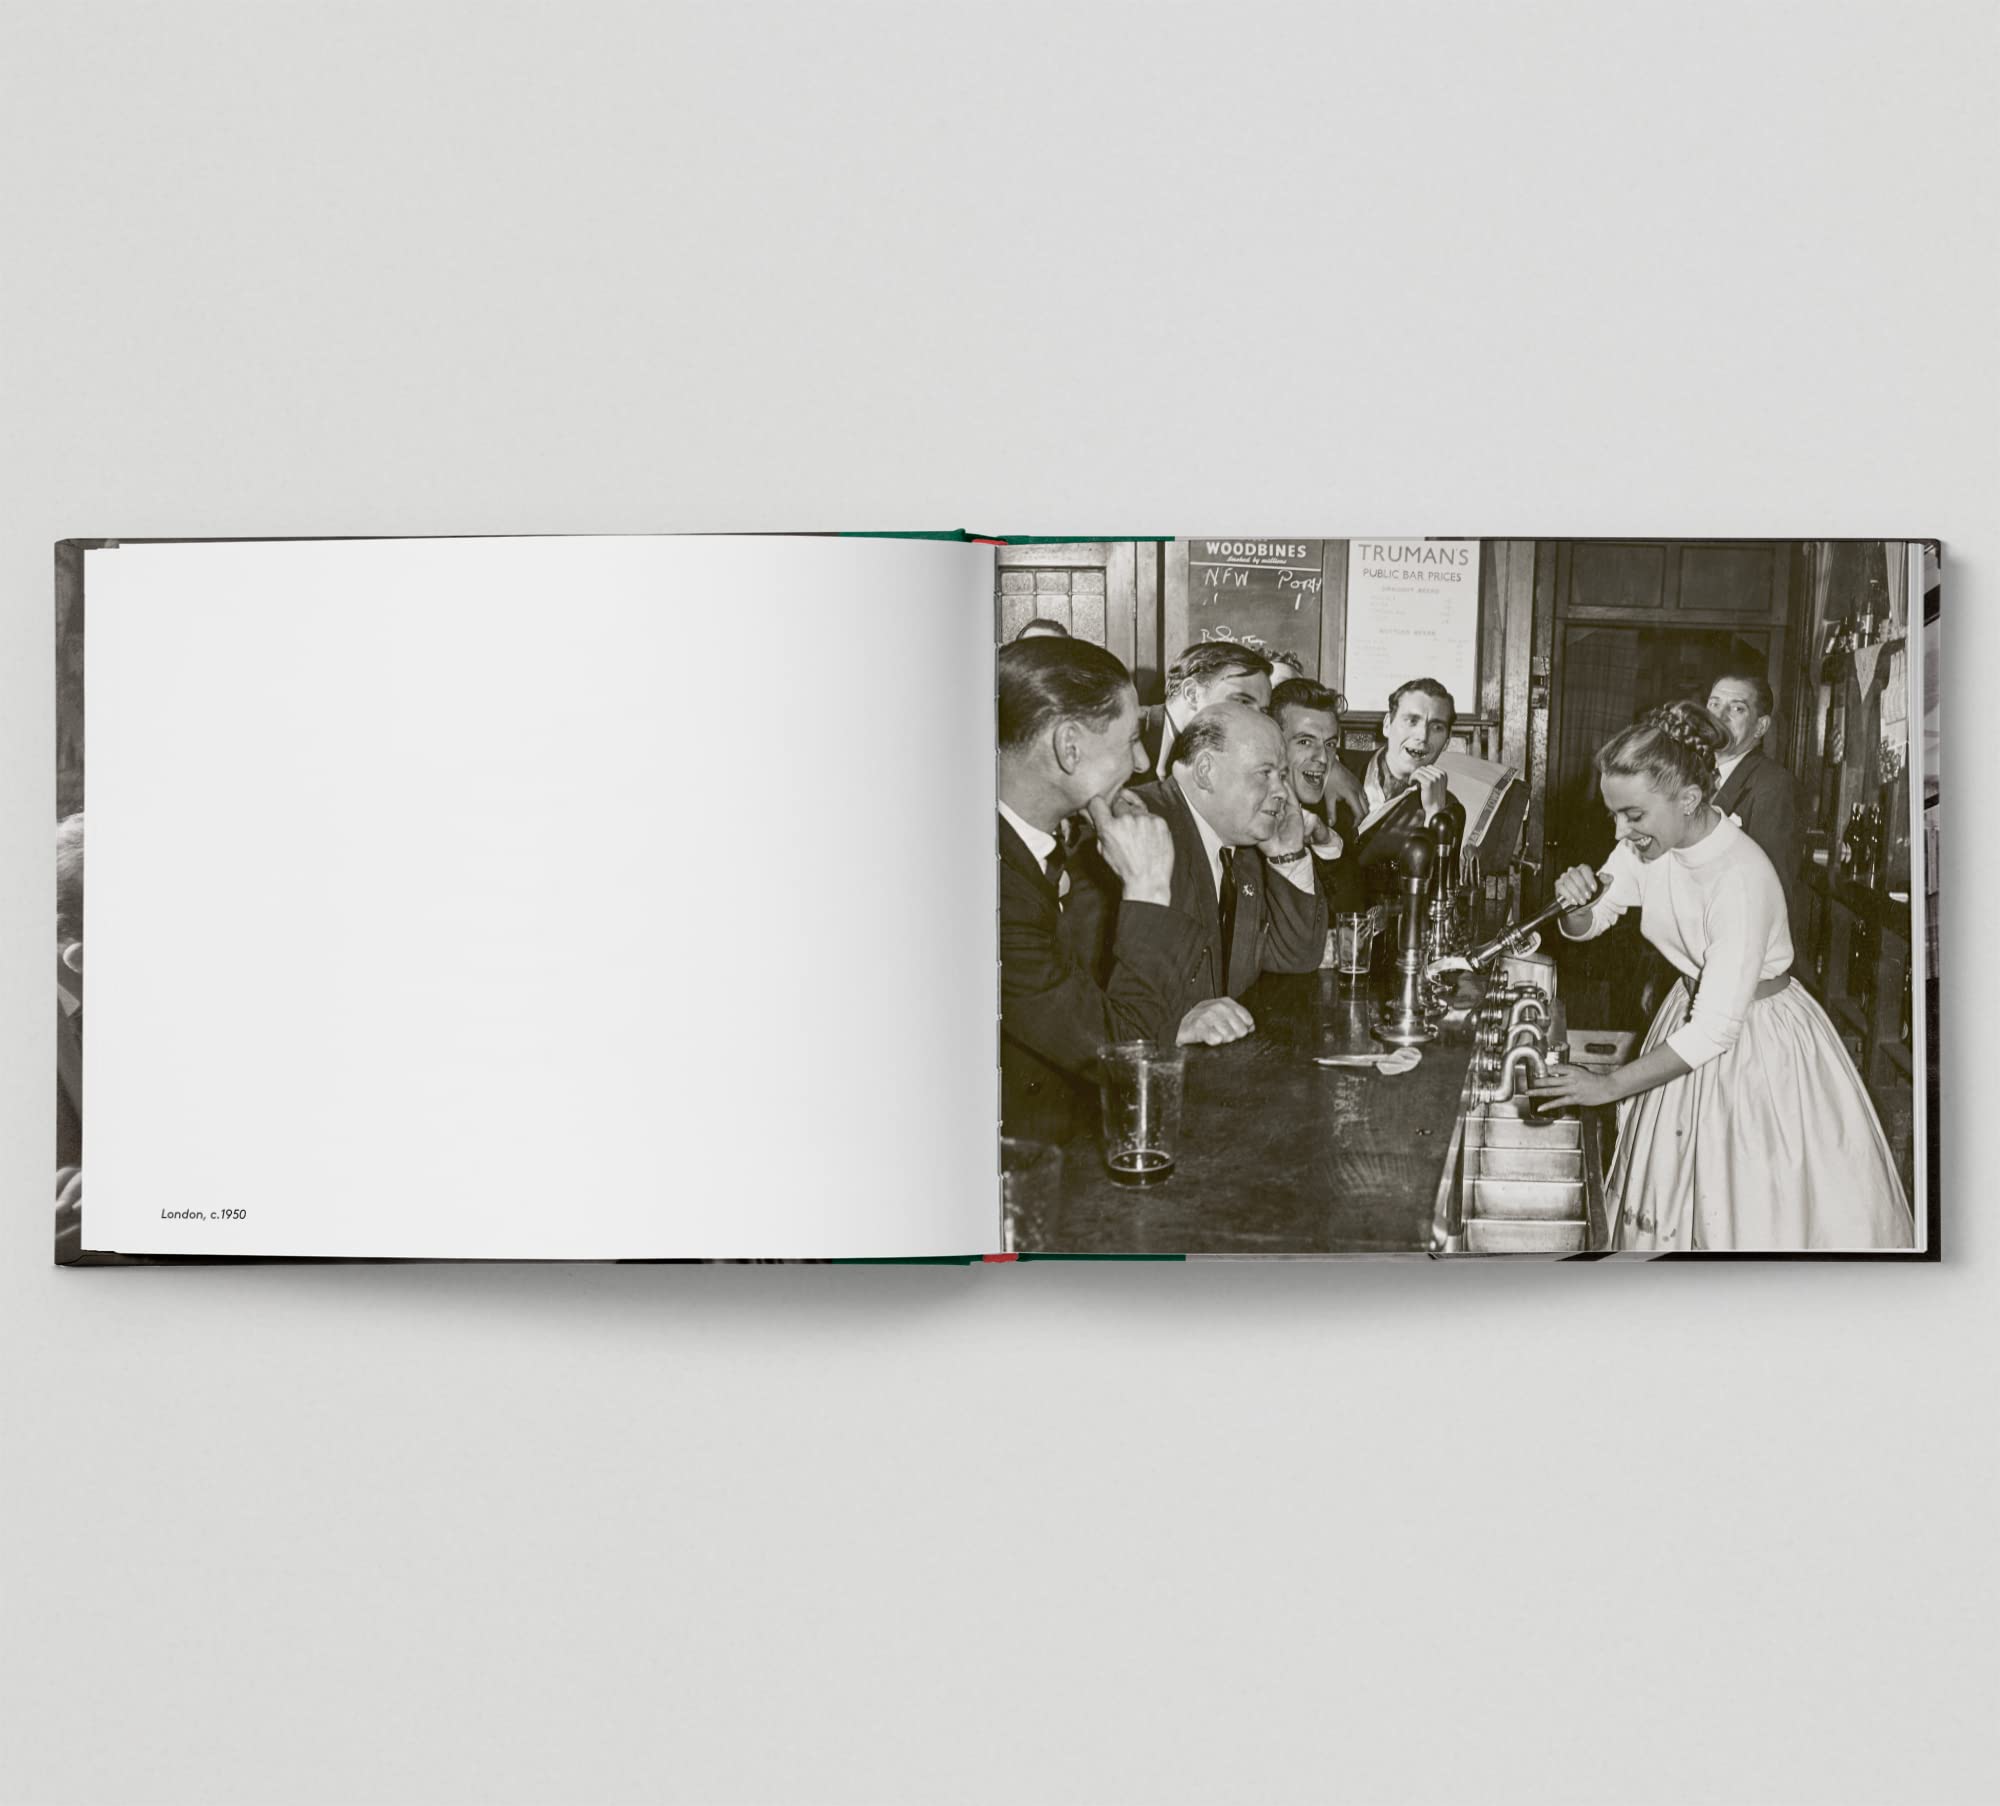 Book- The London Pub 1900-1960 by Hoxton Mini Press (Author)